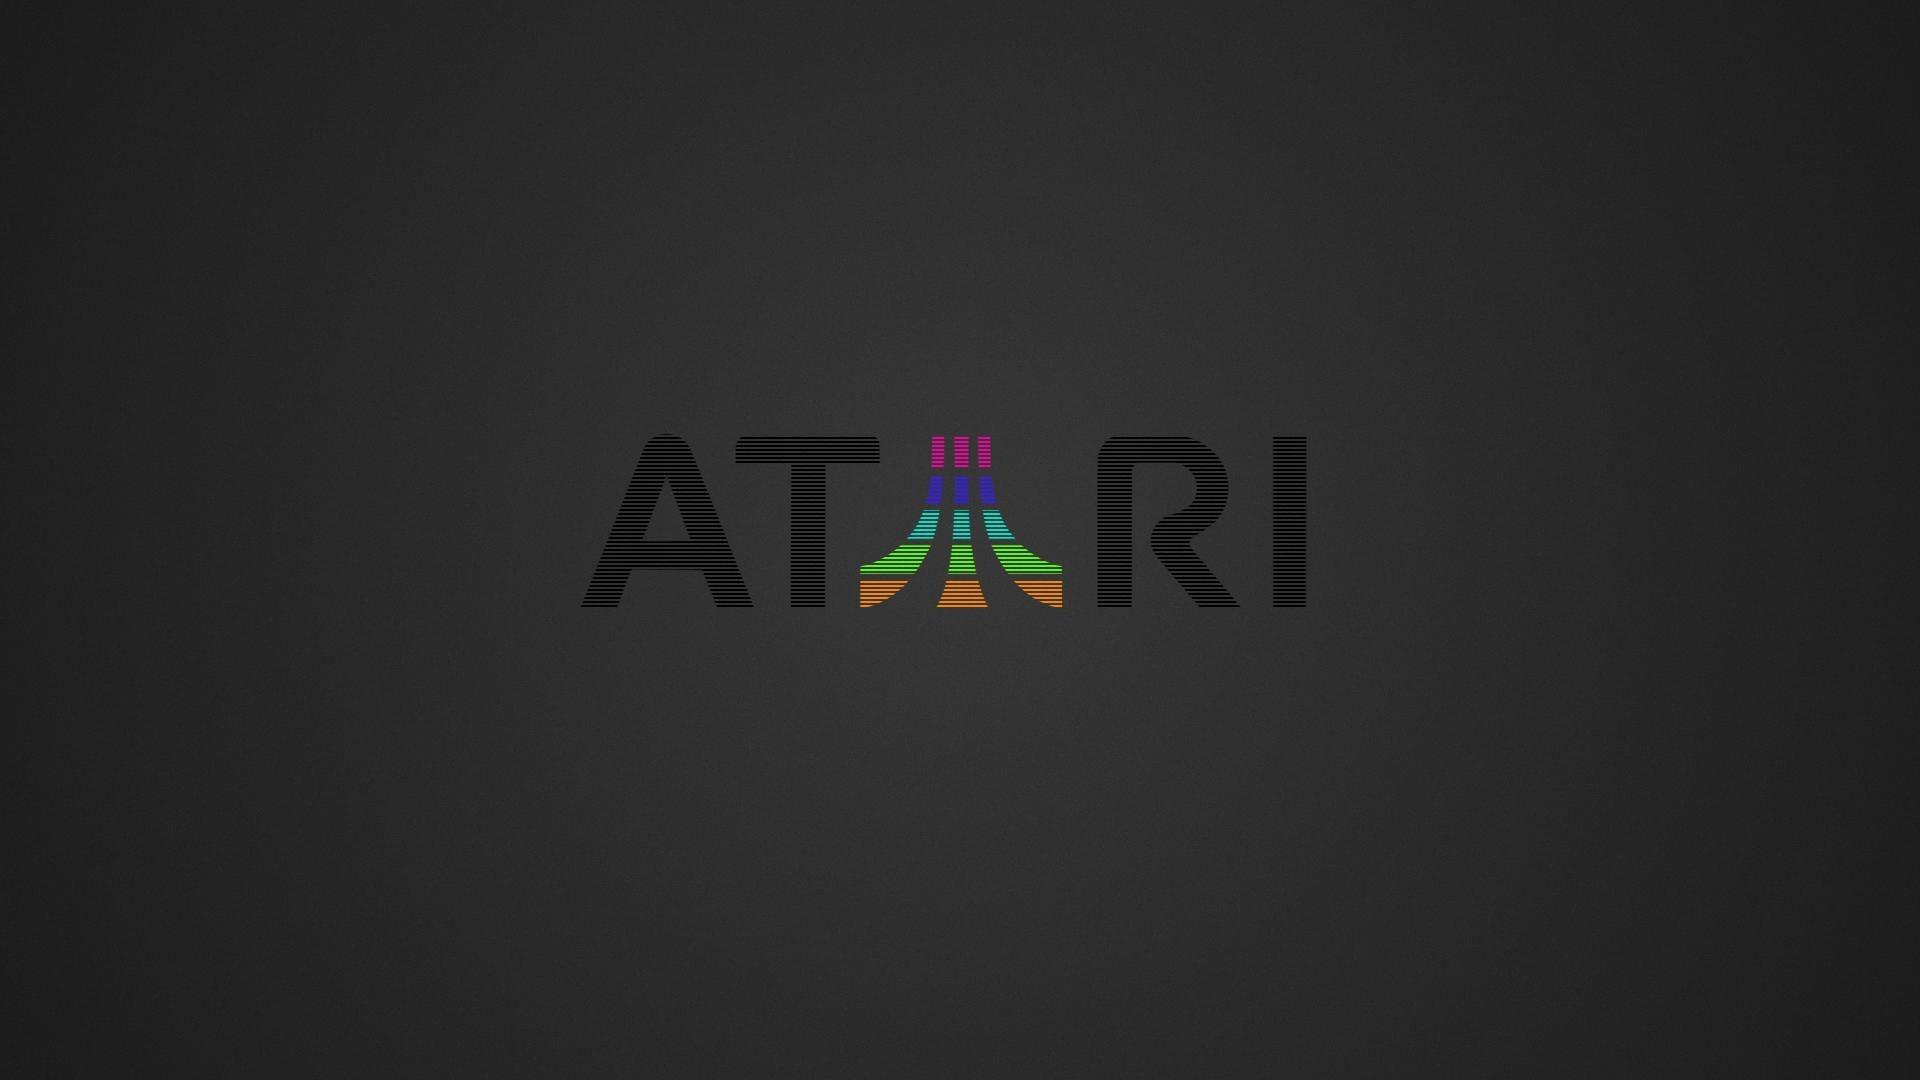 Cool Game Company Logo - Cool Atari Game Company Logo Wallpaper